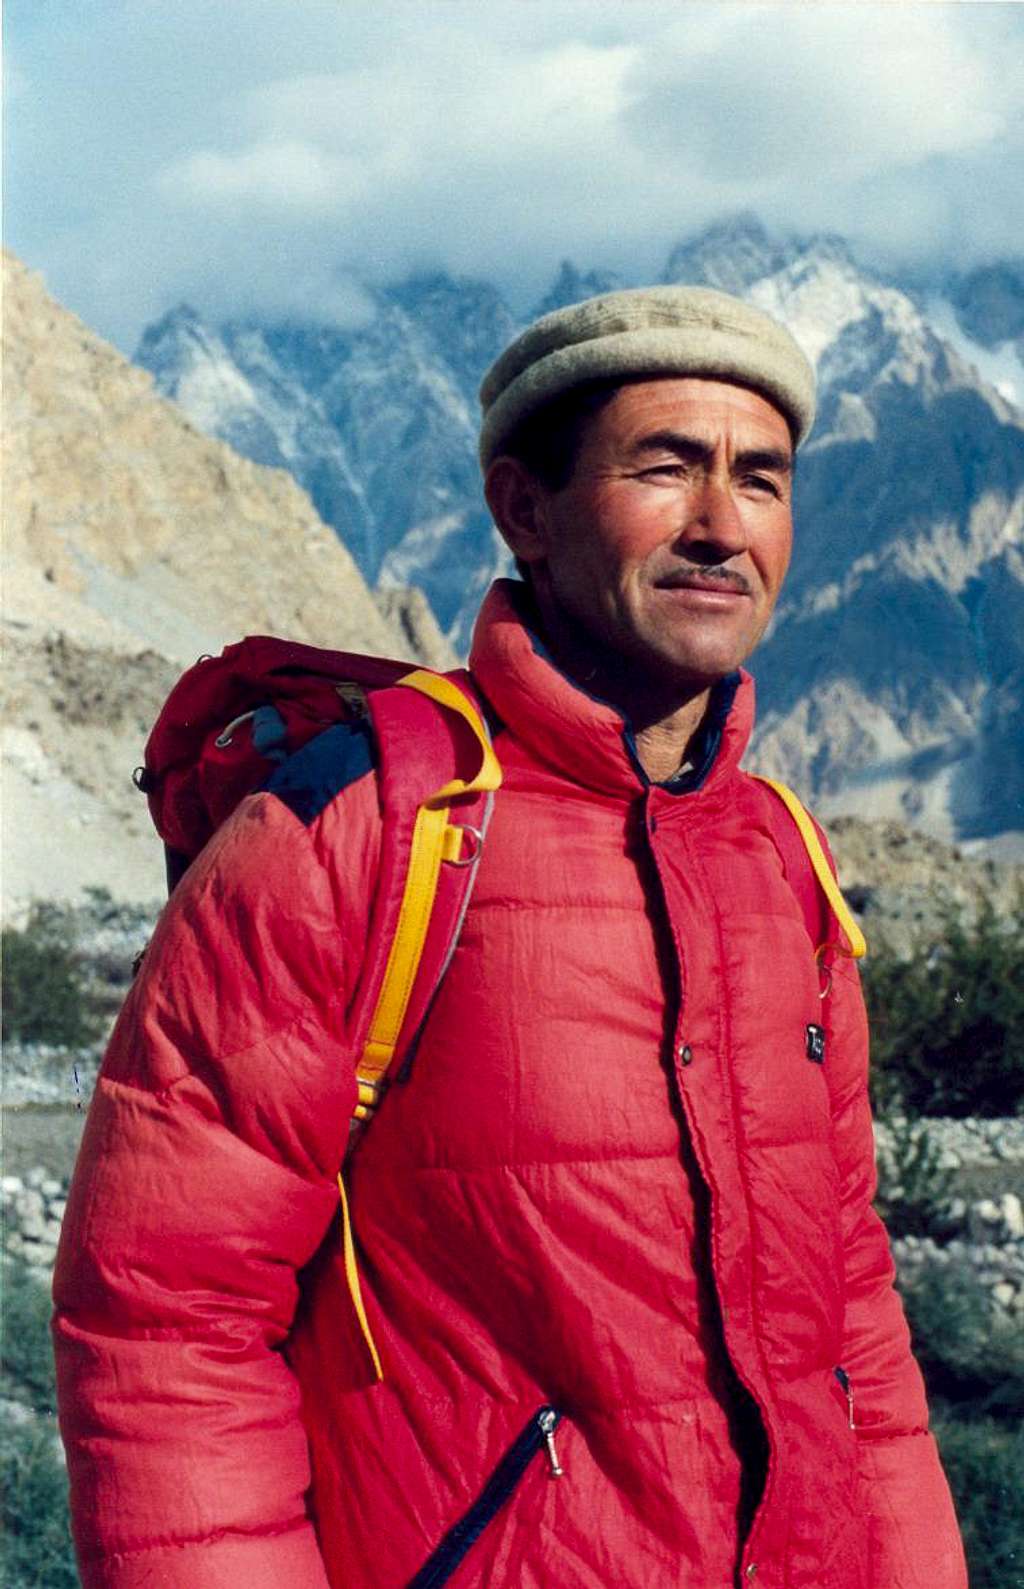 Ghulam Moahmmed a Pakistani climber